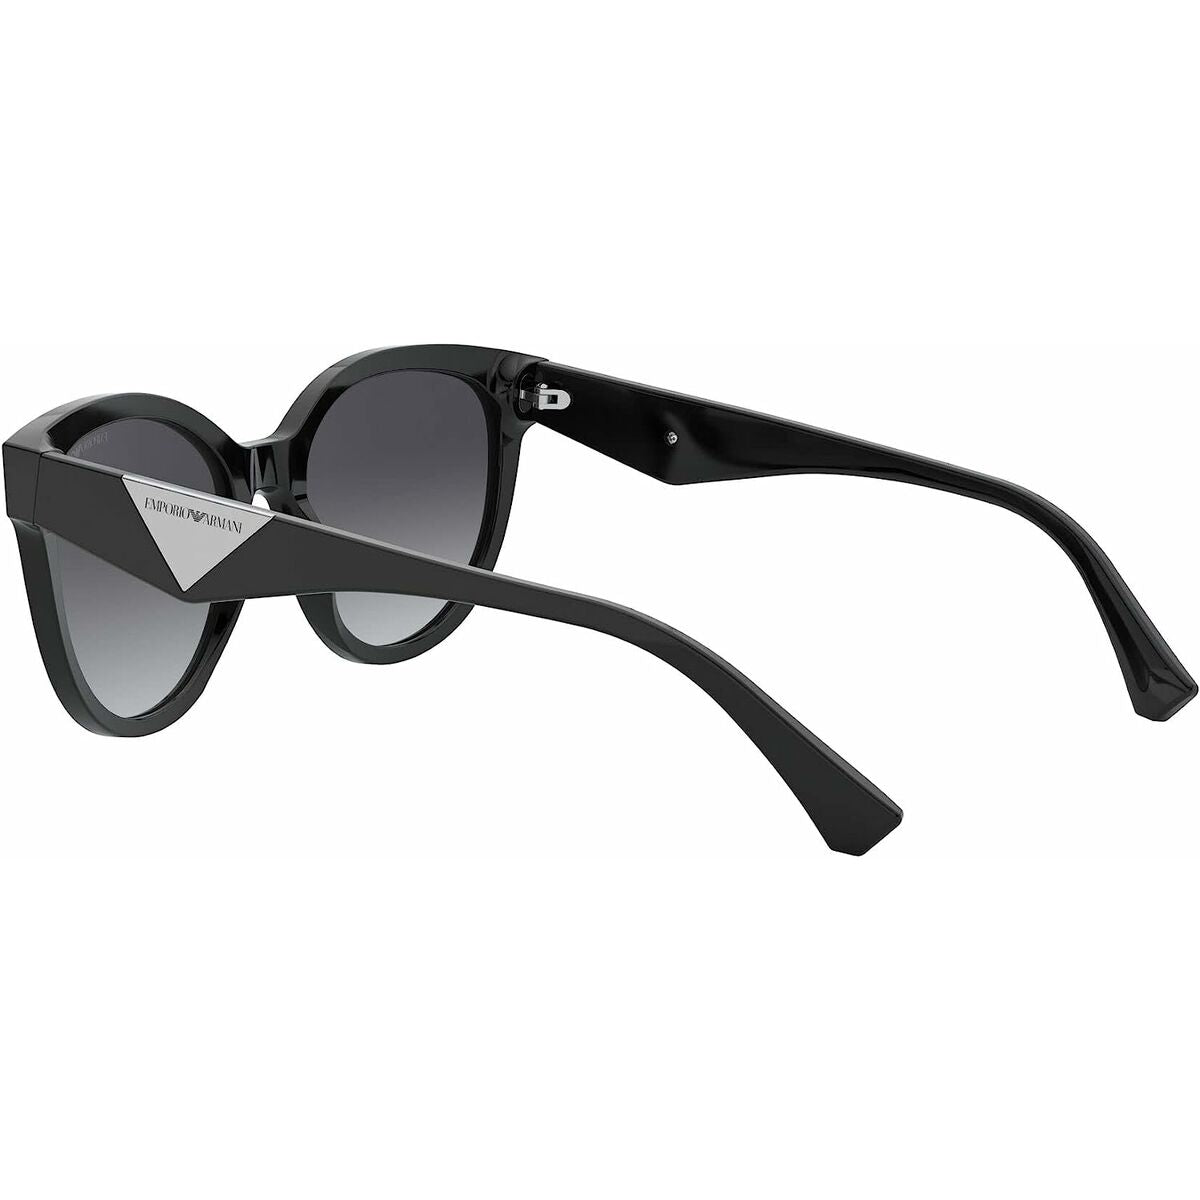 Kaufe Damensonnenbrille Armani EA 4140 bei AWK Flagship um € 167.00